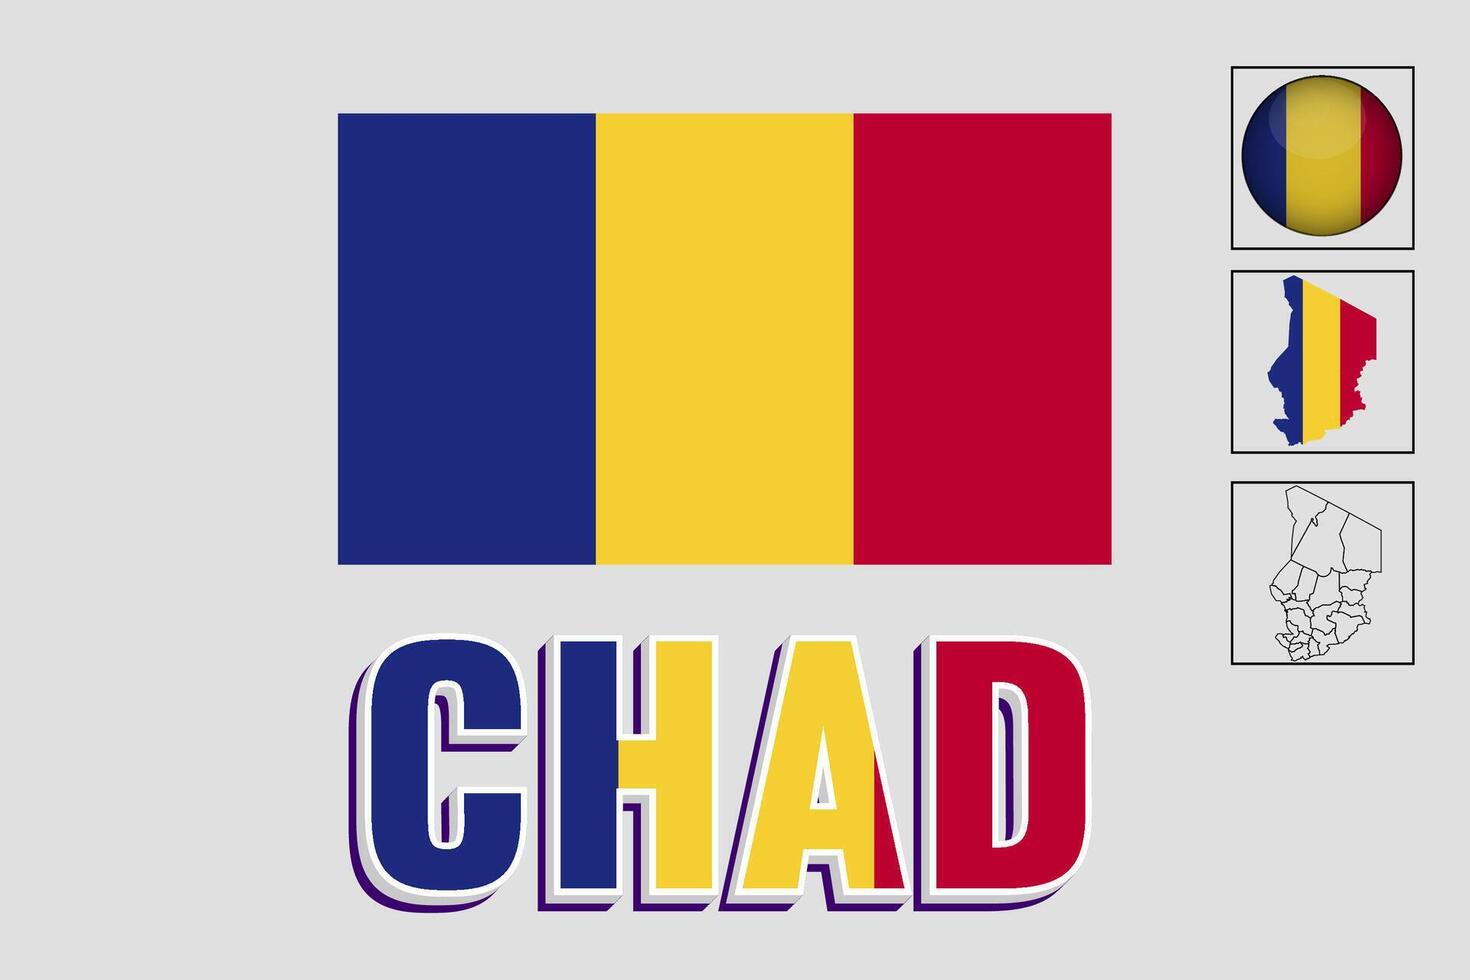 Chad mapa y Chad bandera vector dibujo